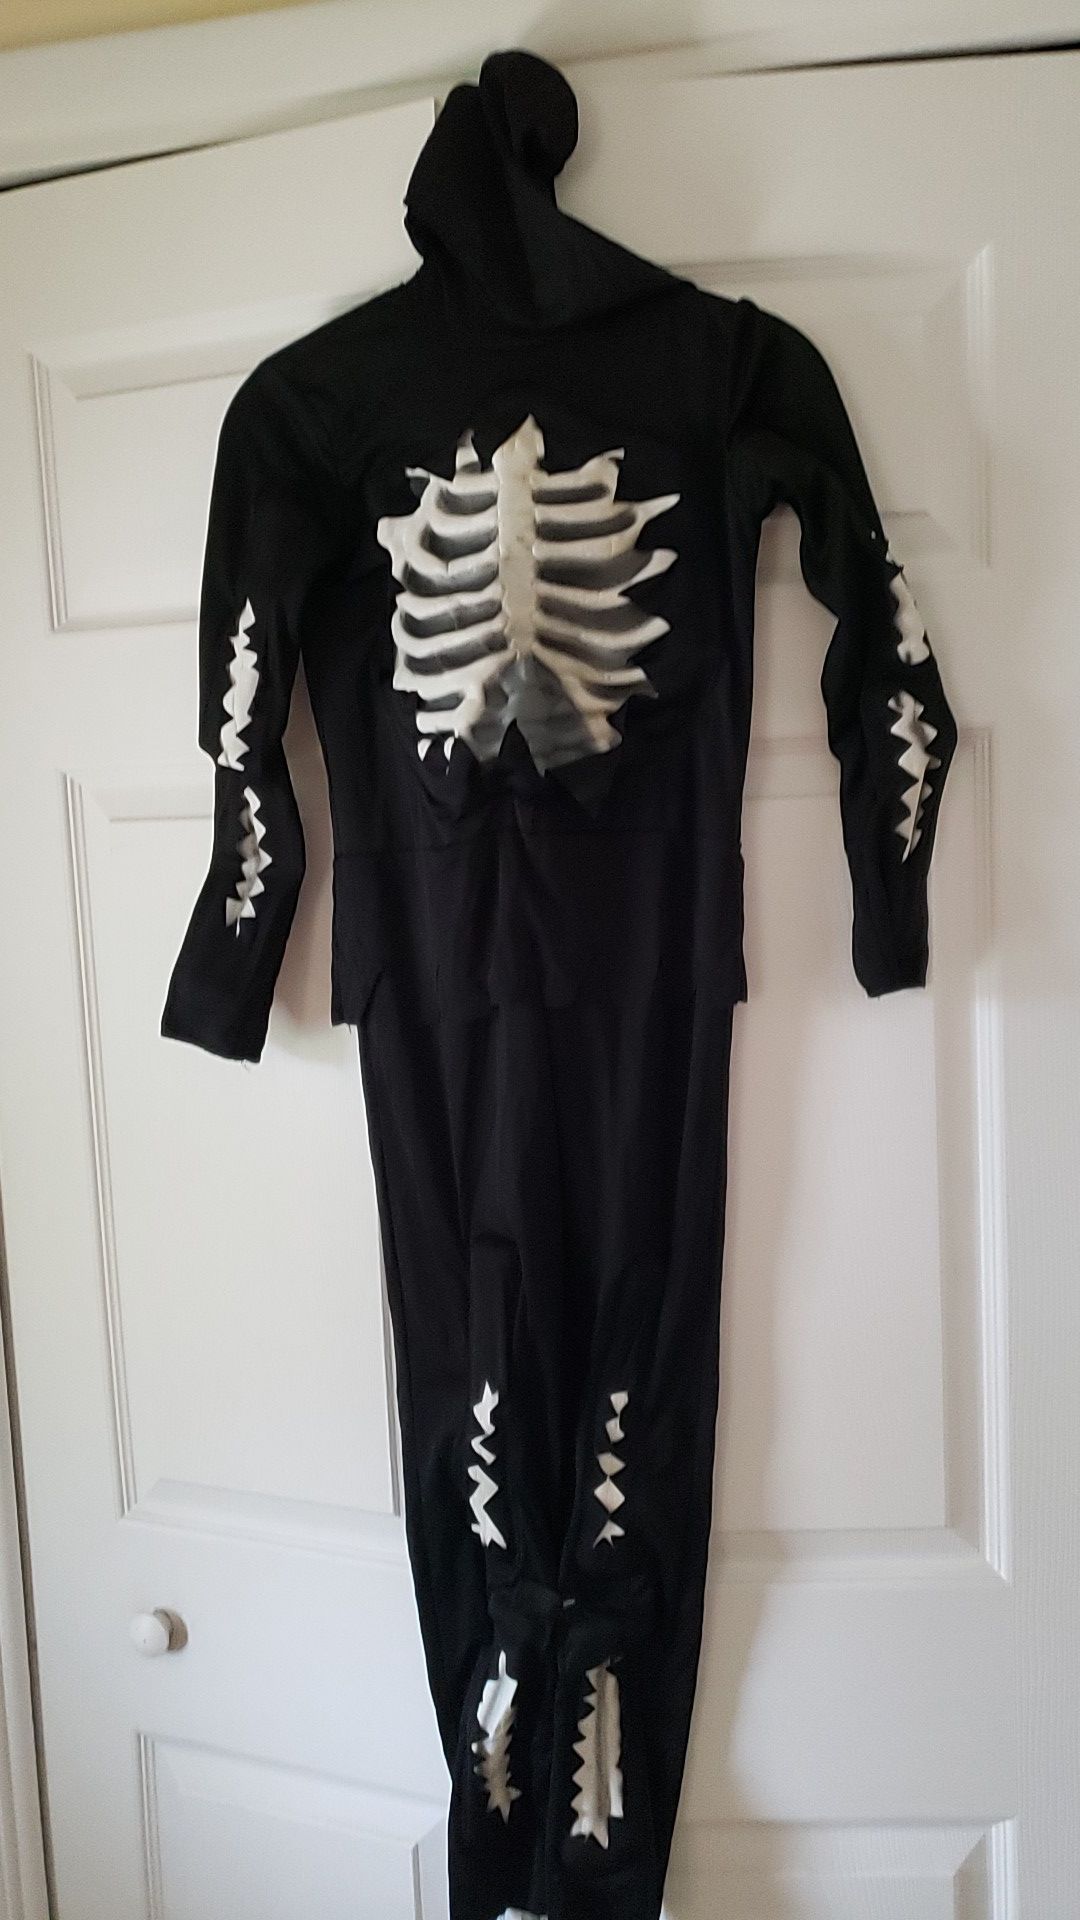 New child skeleton costume